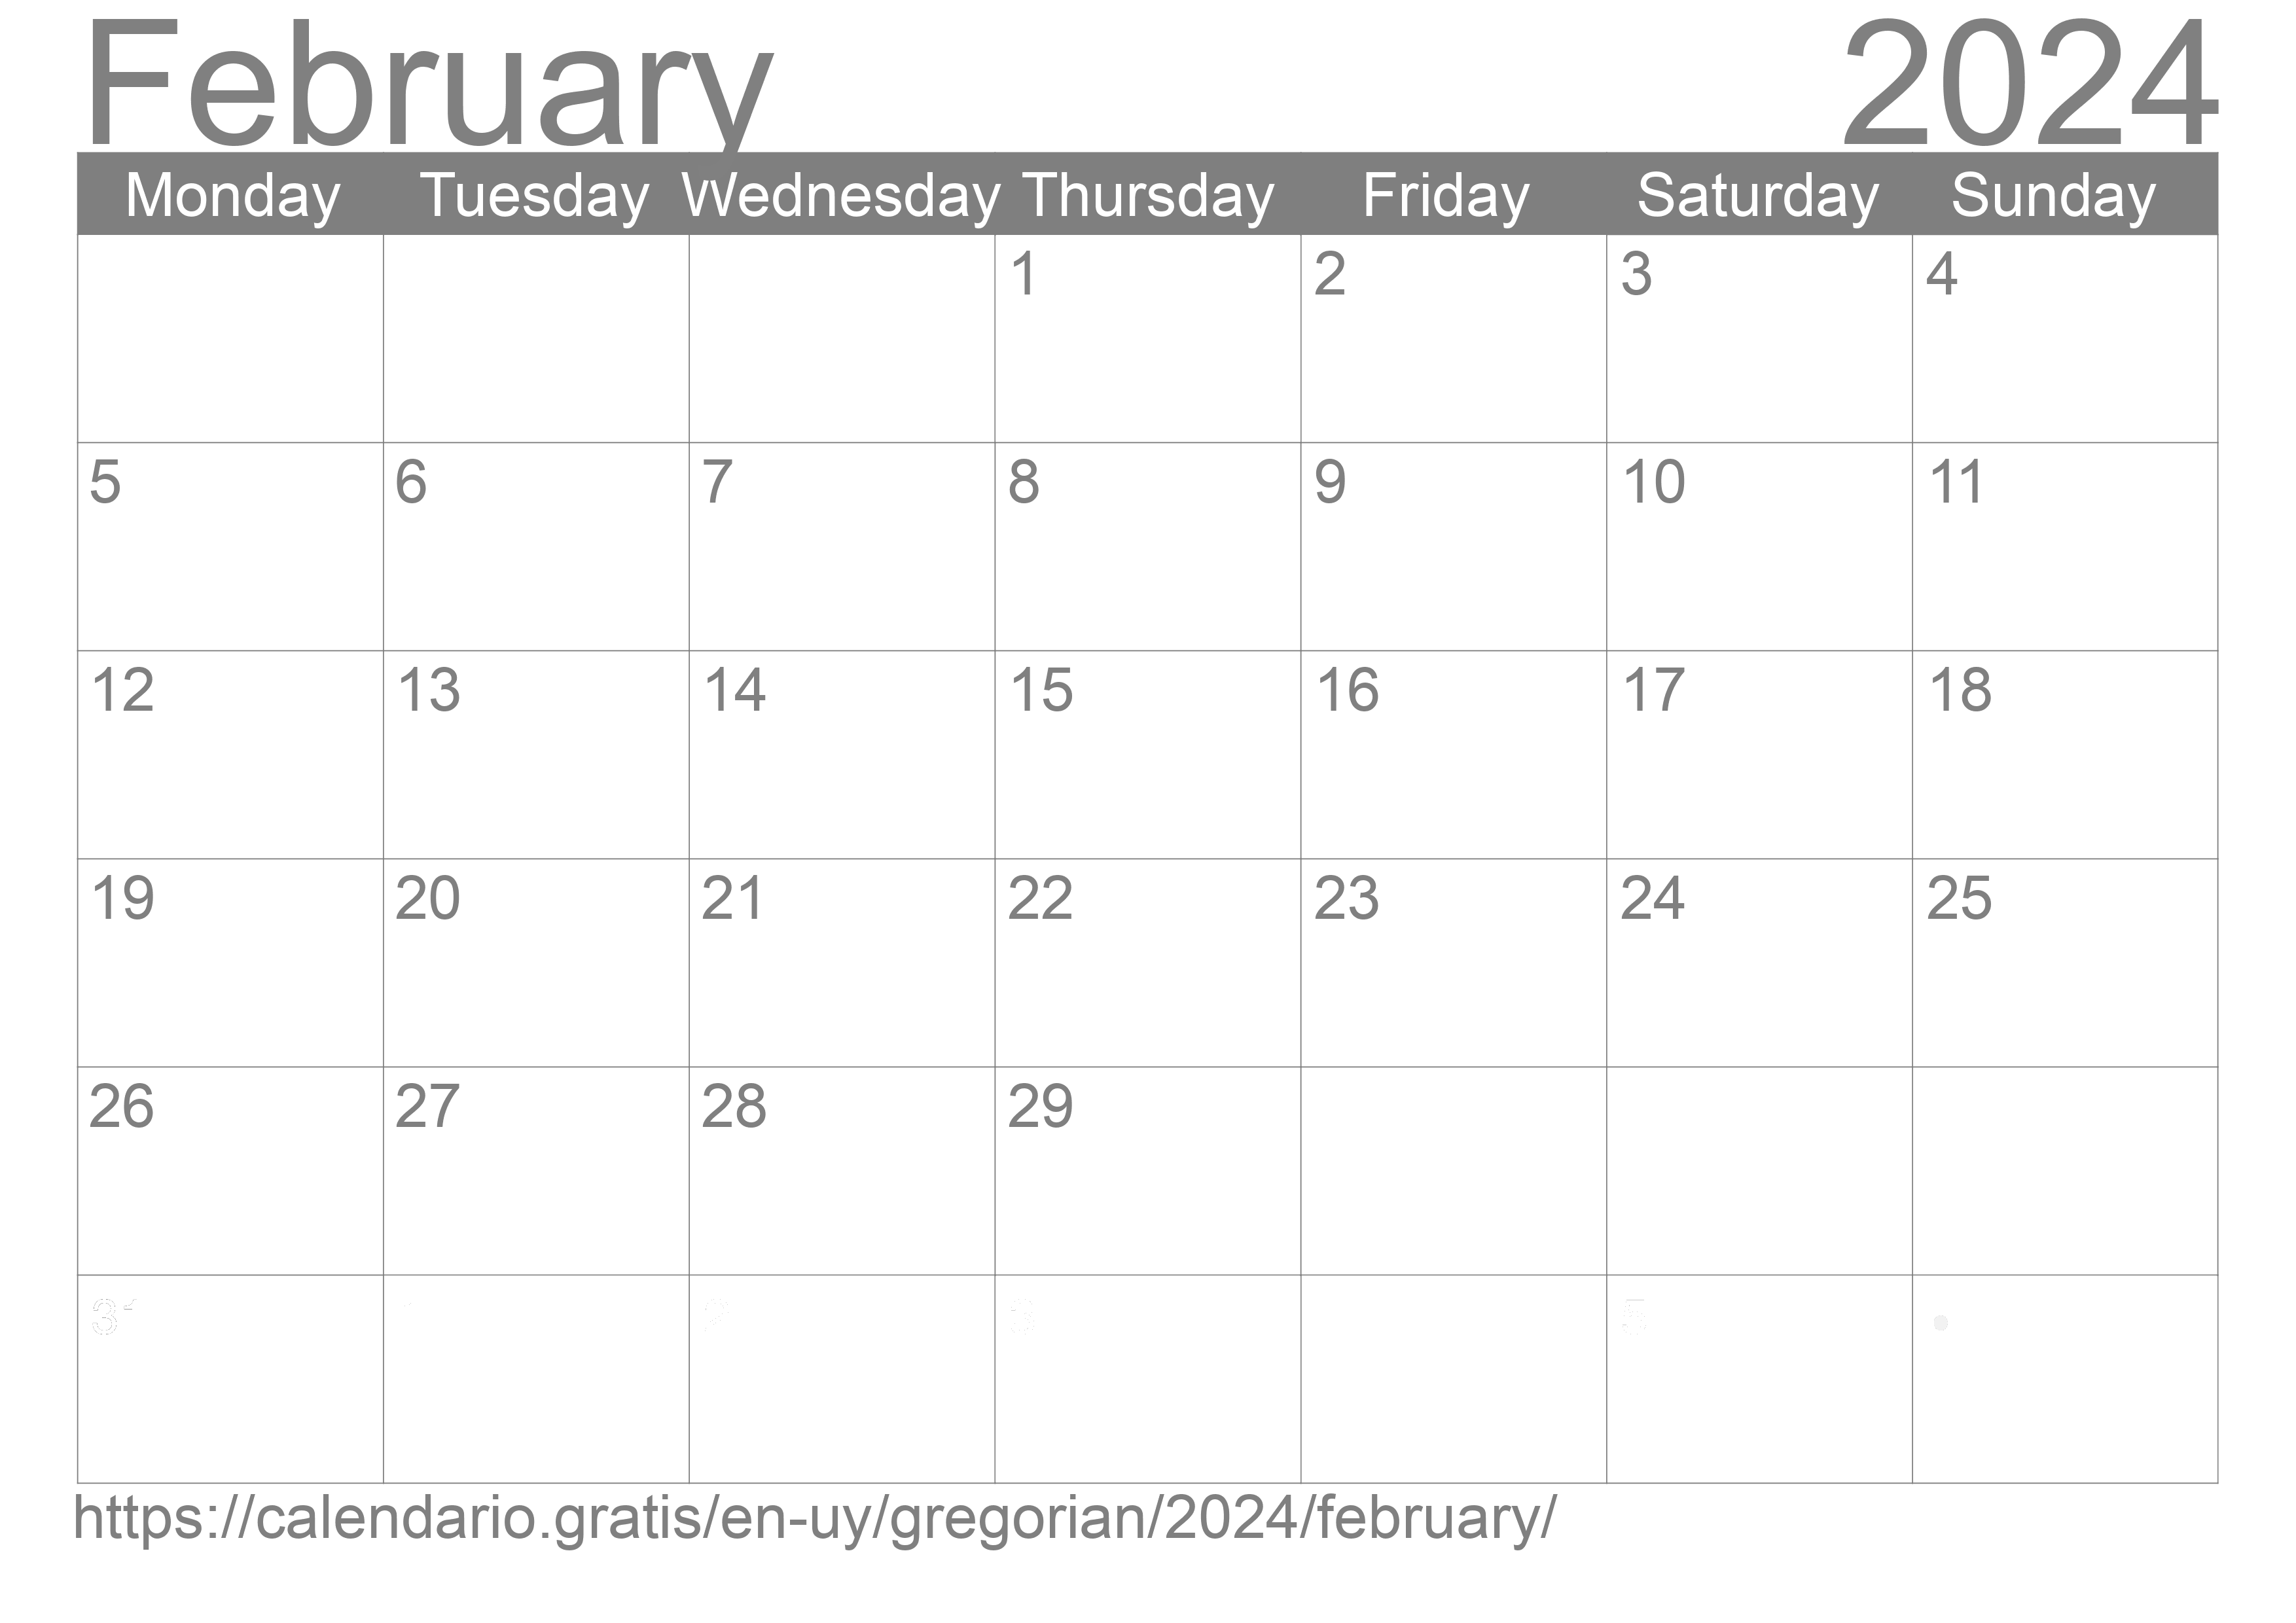 Calendar February 2024 to print